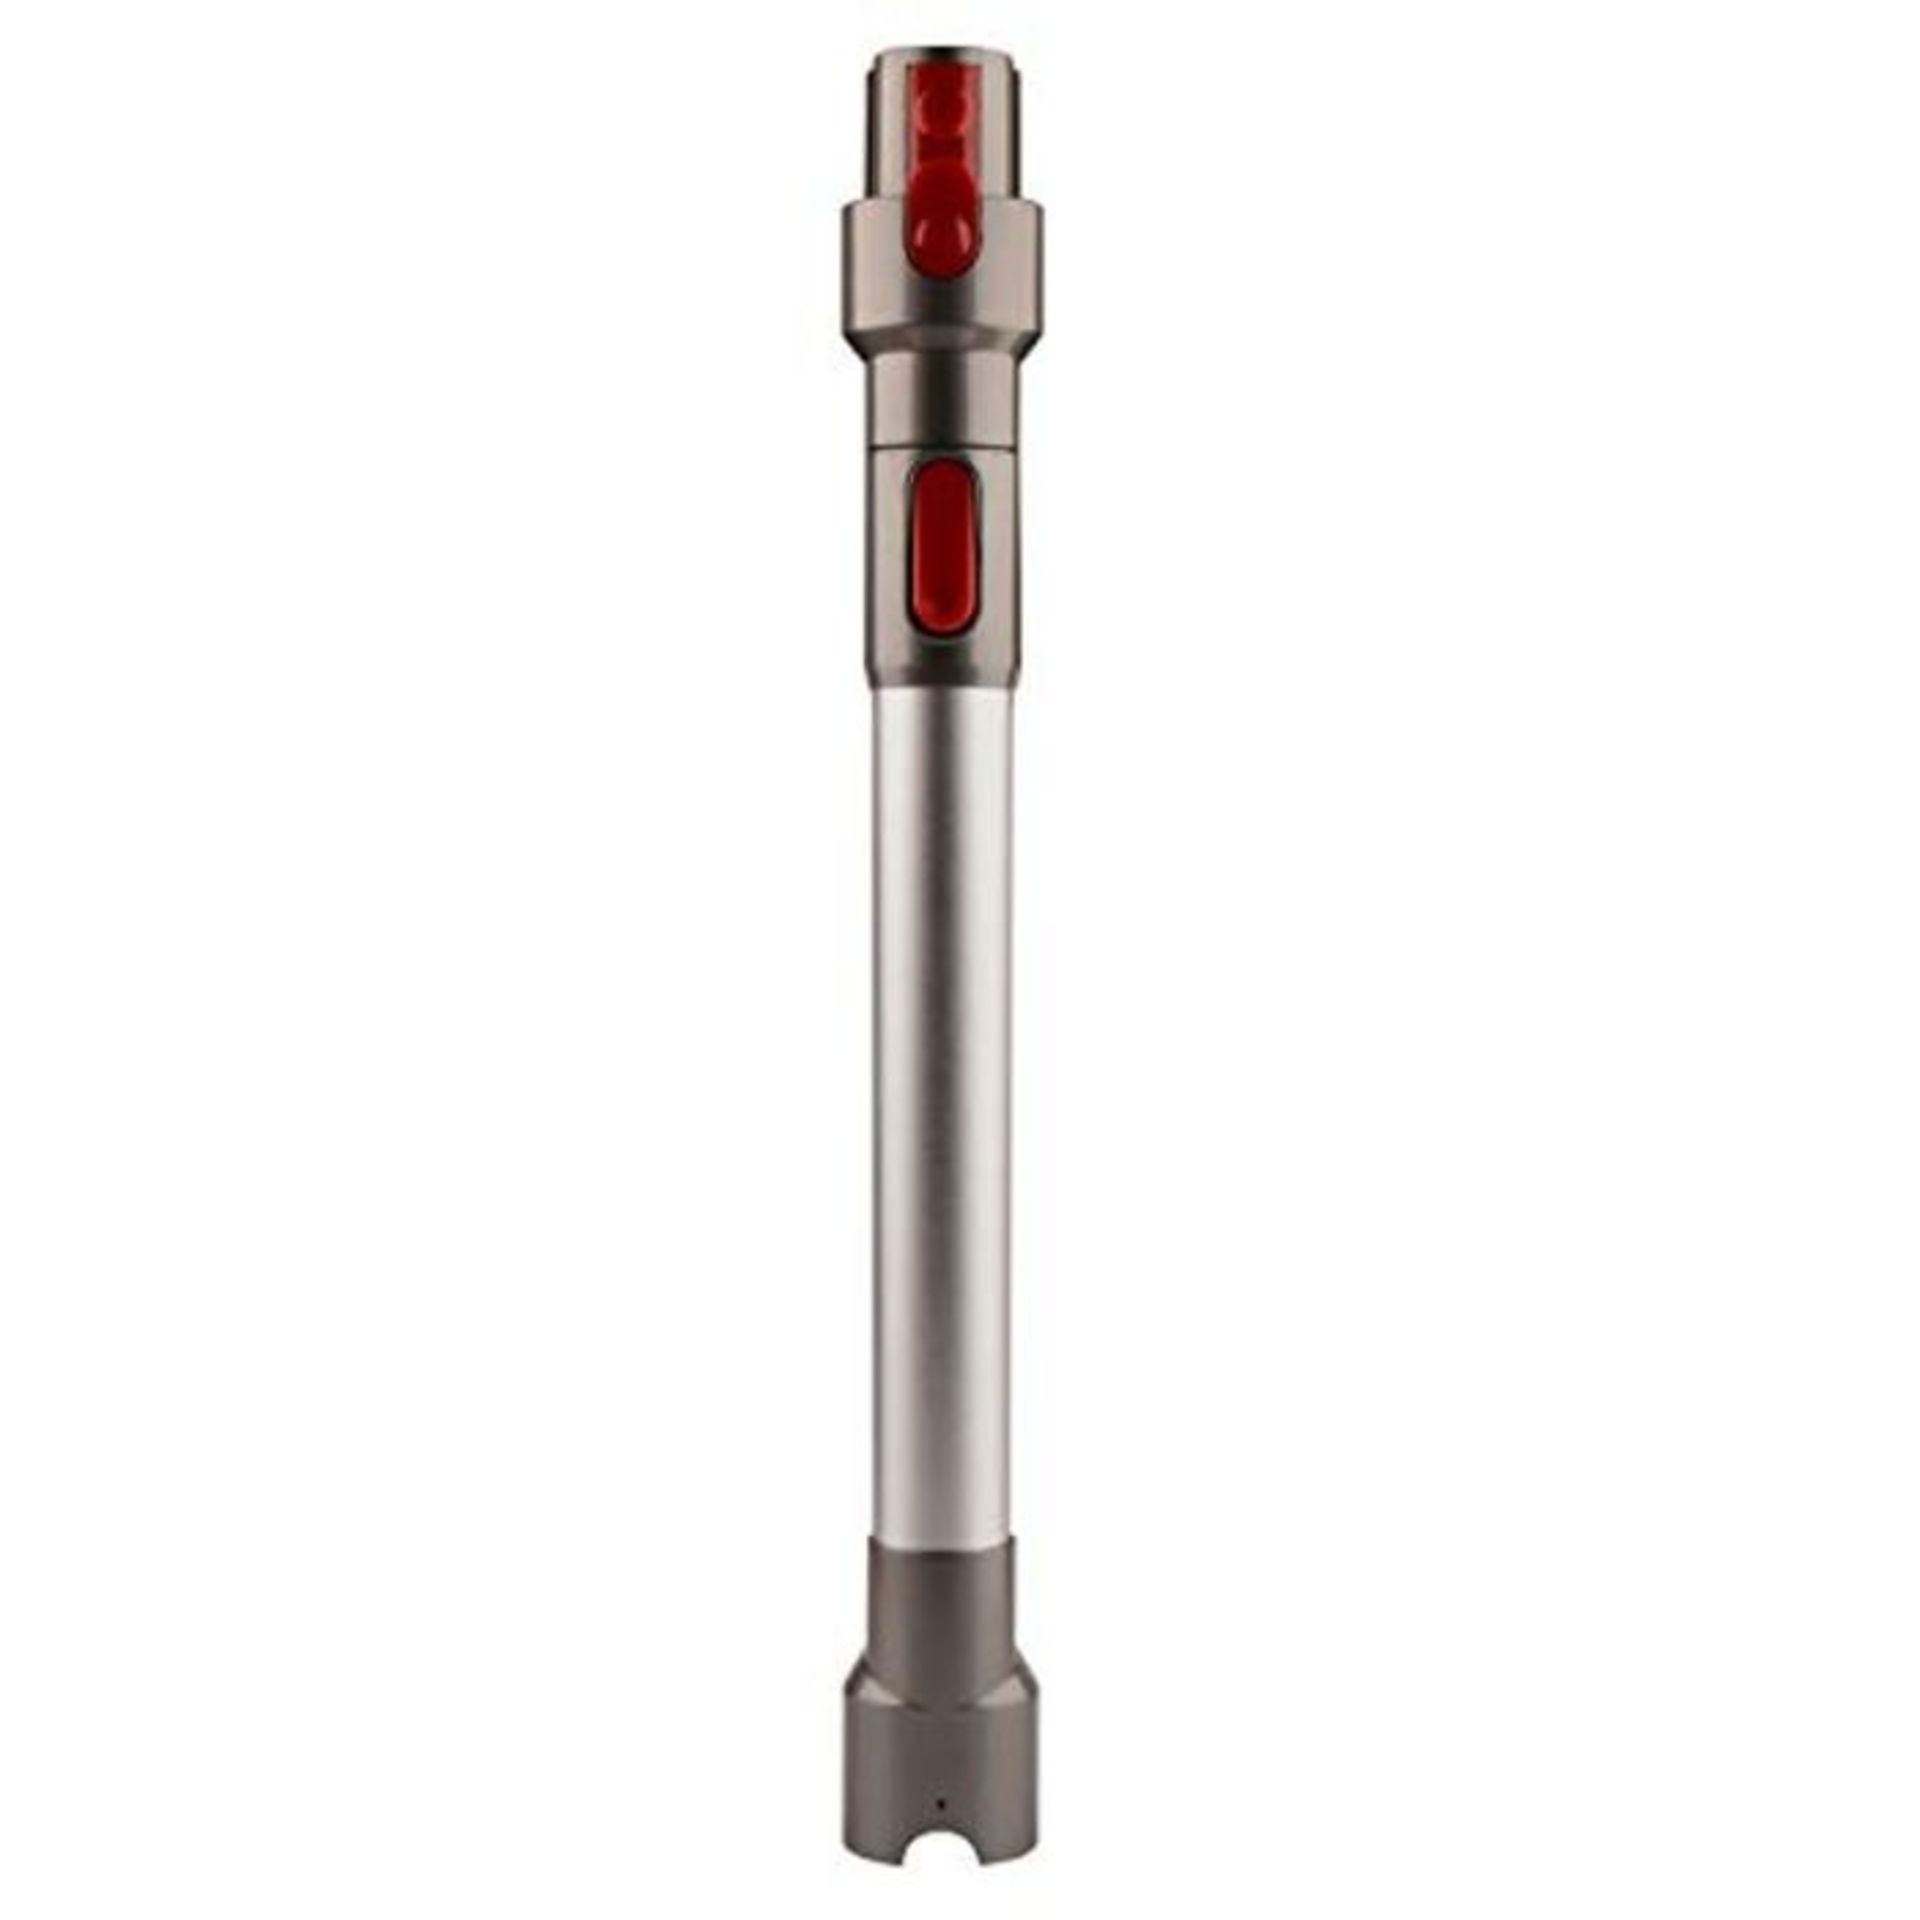 Adjustable Extension Wand Tube Pipe Rod Replacement for Dyson V7 V8 V10 V11 SV10 SV11 - Image 4 of 6